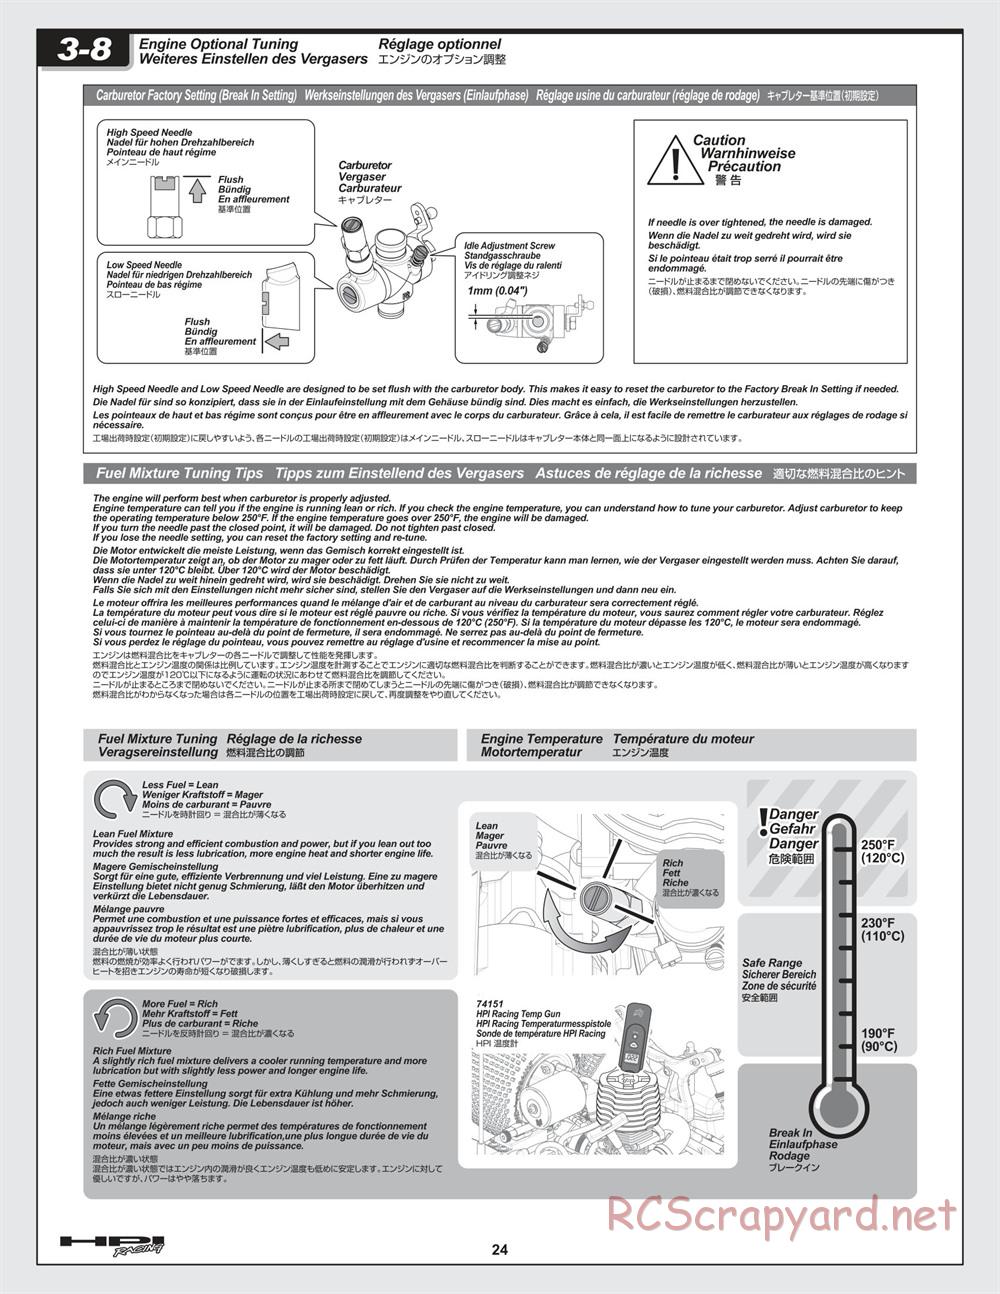 HPI - Firestorm 10T - Manual - Page 24